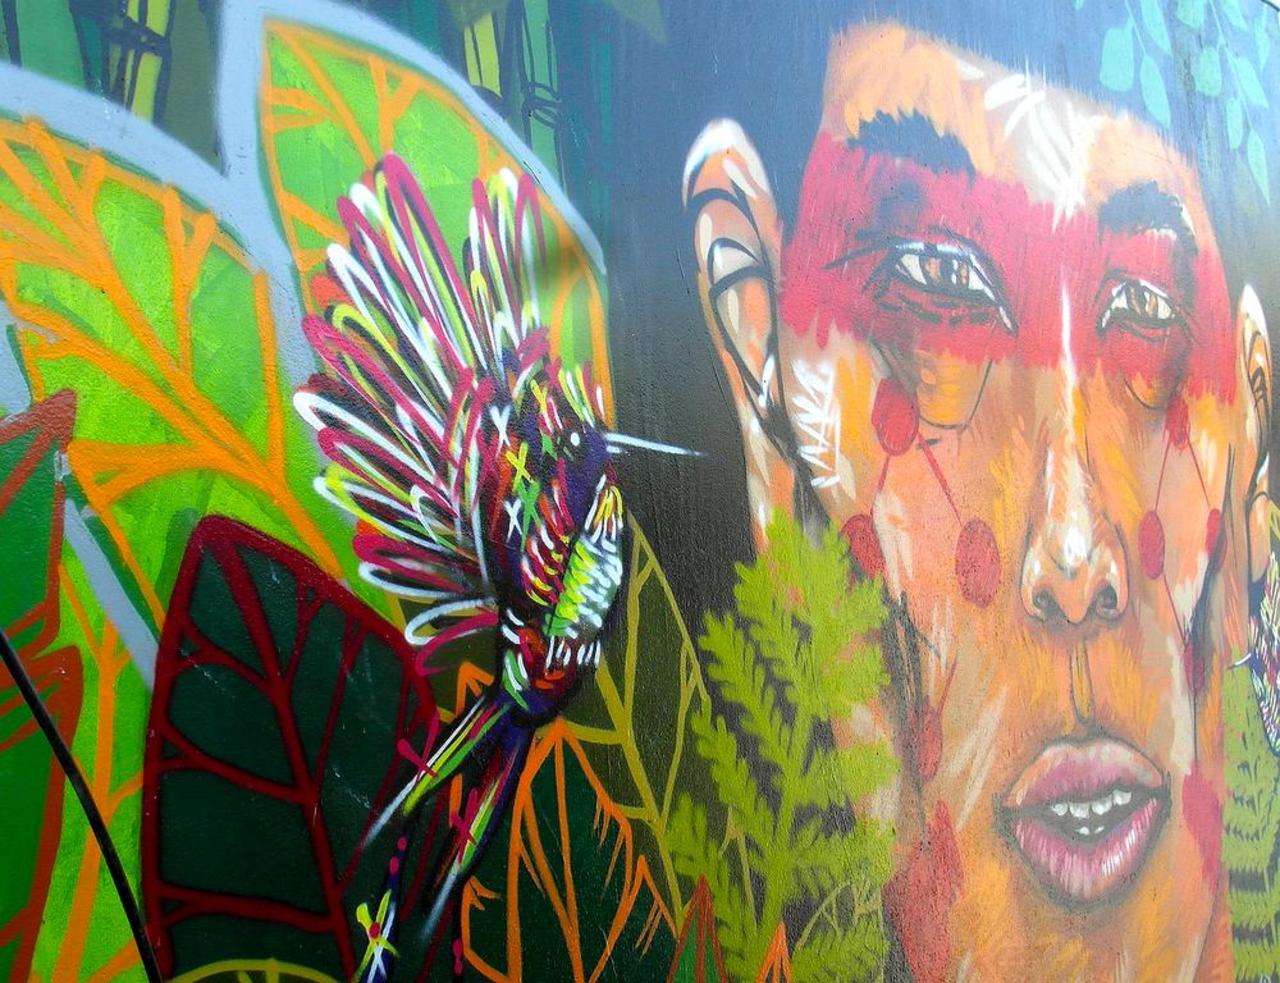 Street Art by CHARQUIPUNK in #Saint-Nazaire http://www.urbacolors.com #art #mural #graffiti #streetart http://t.co/xWMYkO8Fve